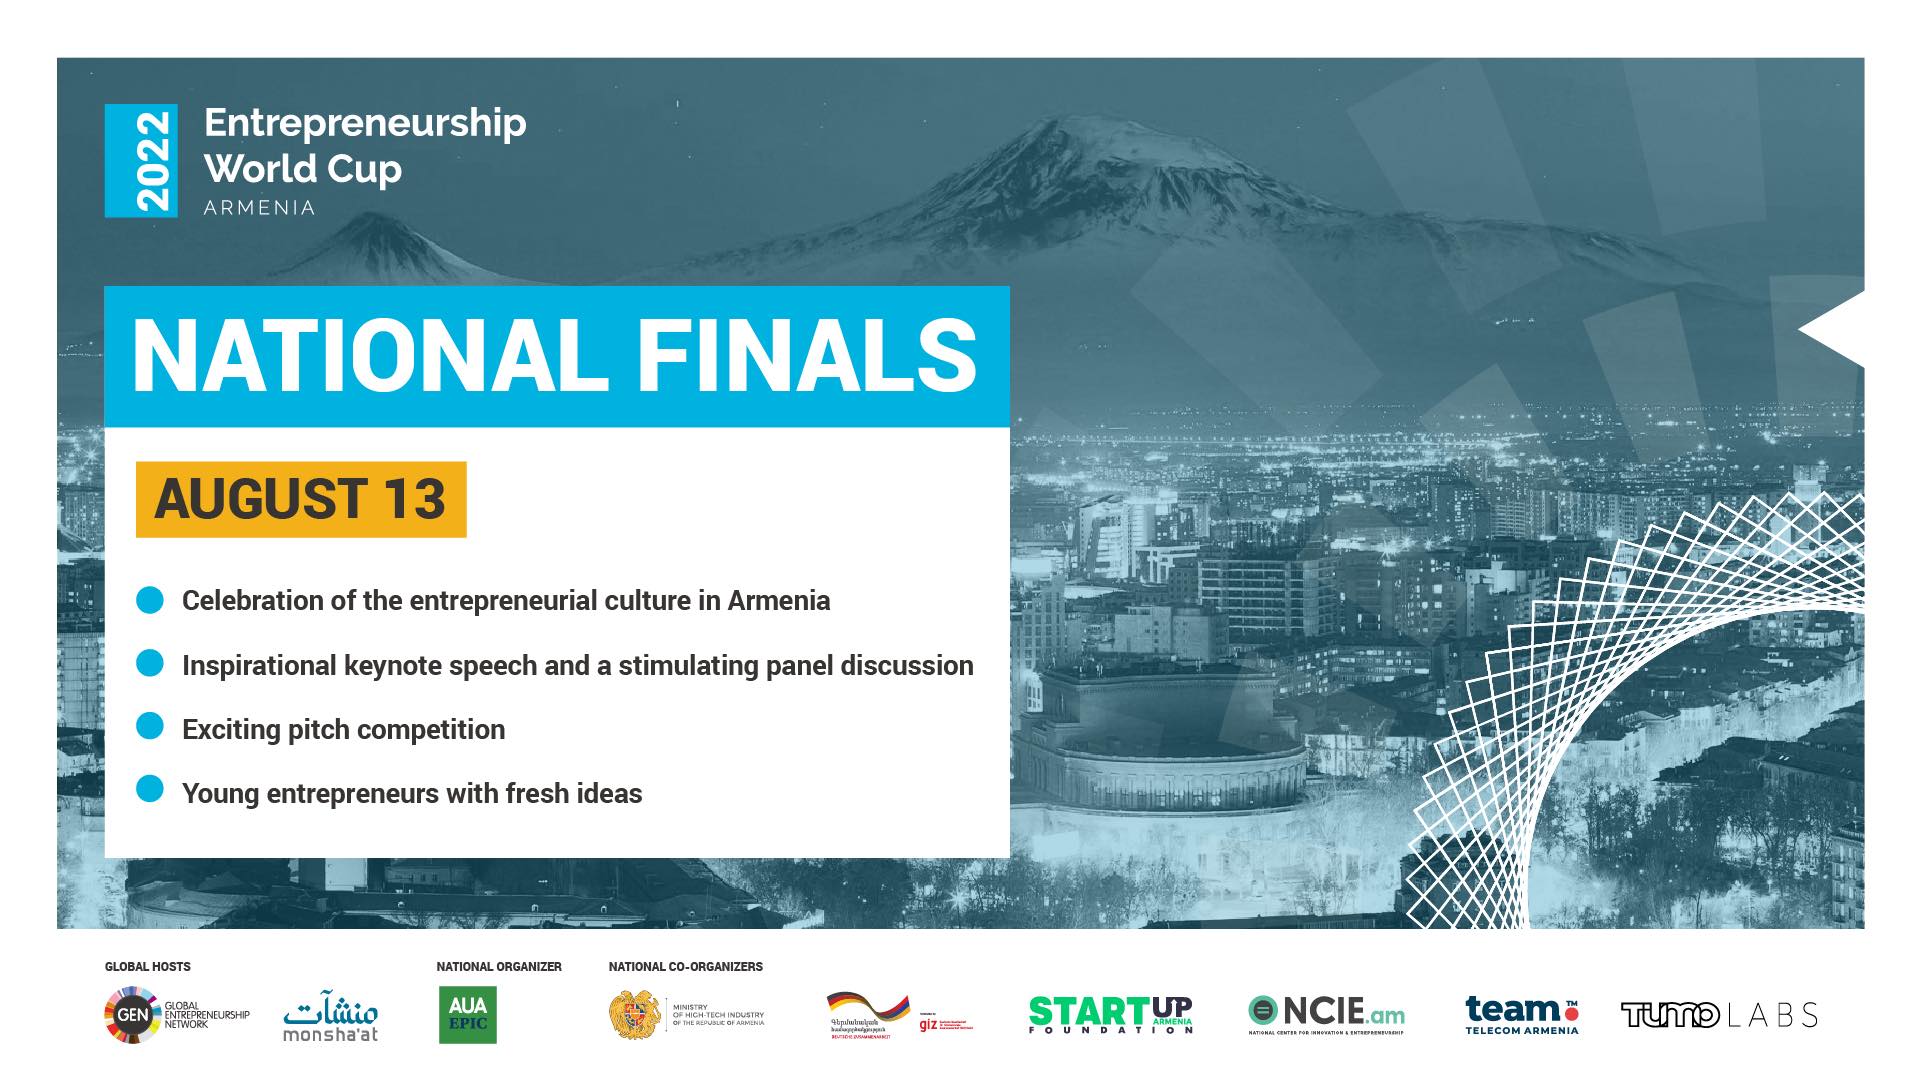 Entrepreneurship World Cup (EWC) Armenia 2022 National Finals